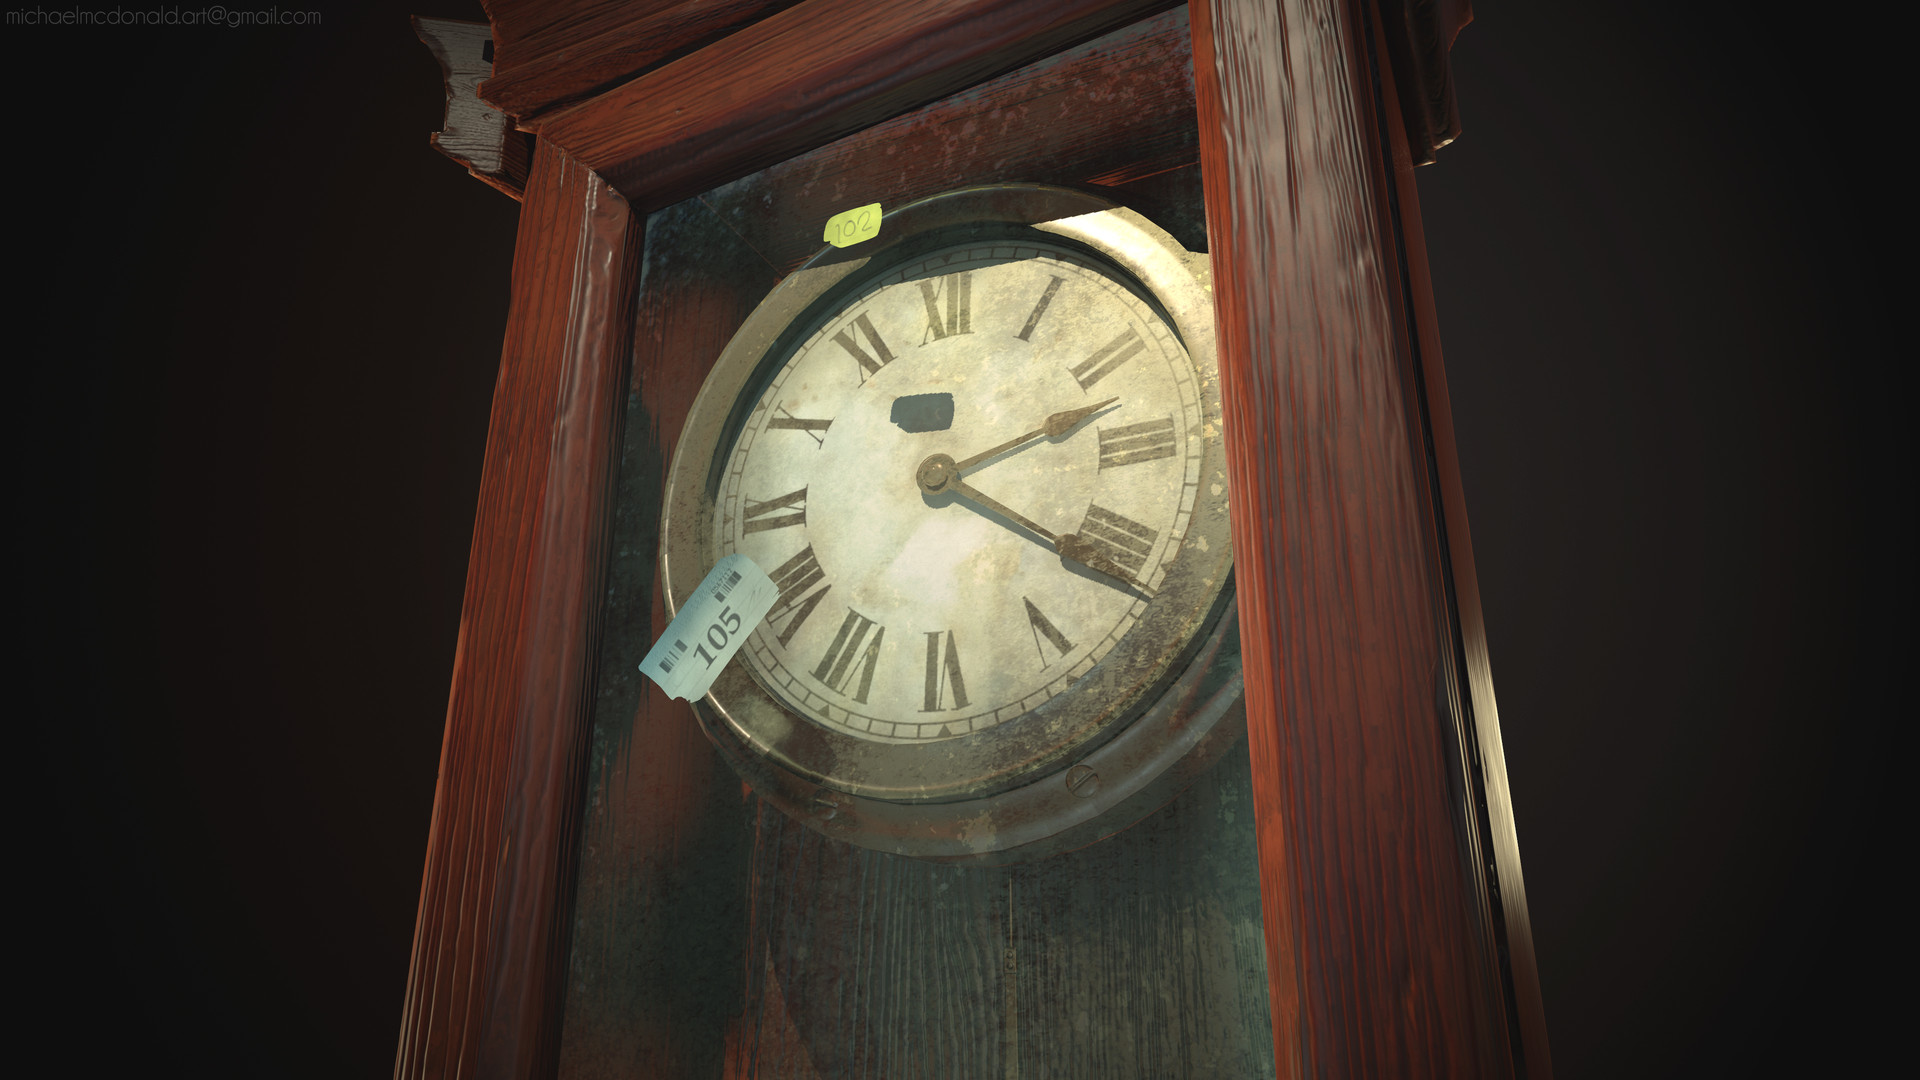 Michael McDonald - Old Clock